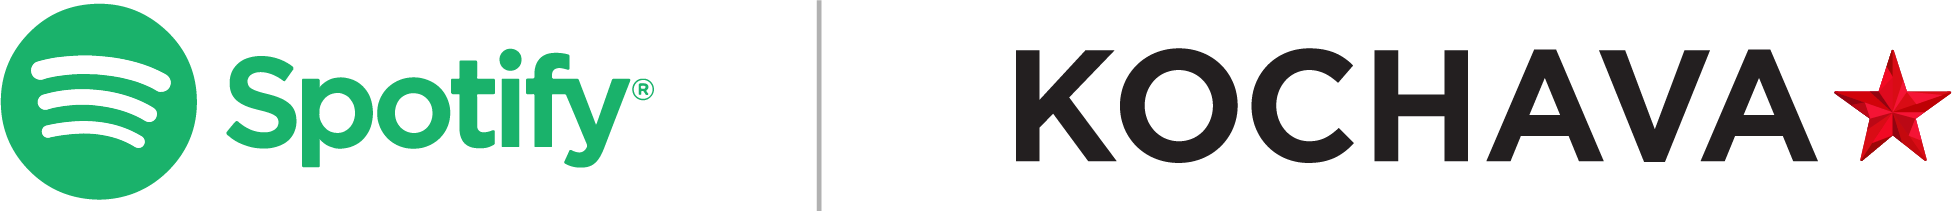 Spotify and Kochava logos